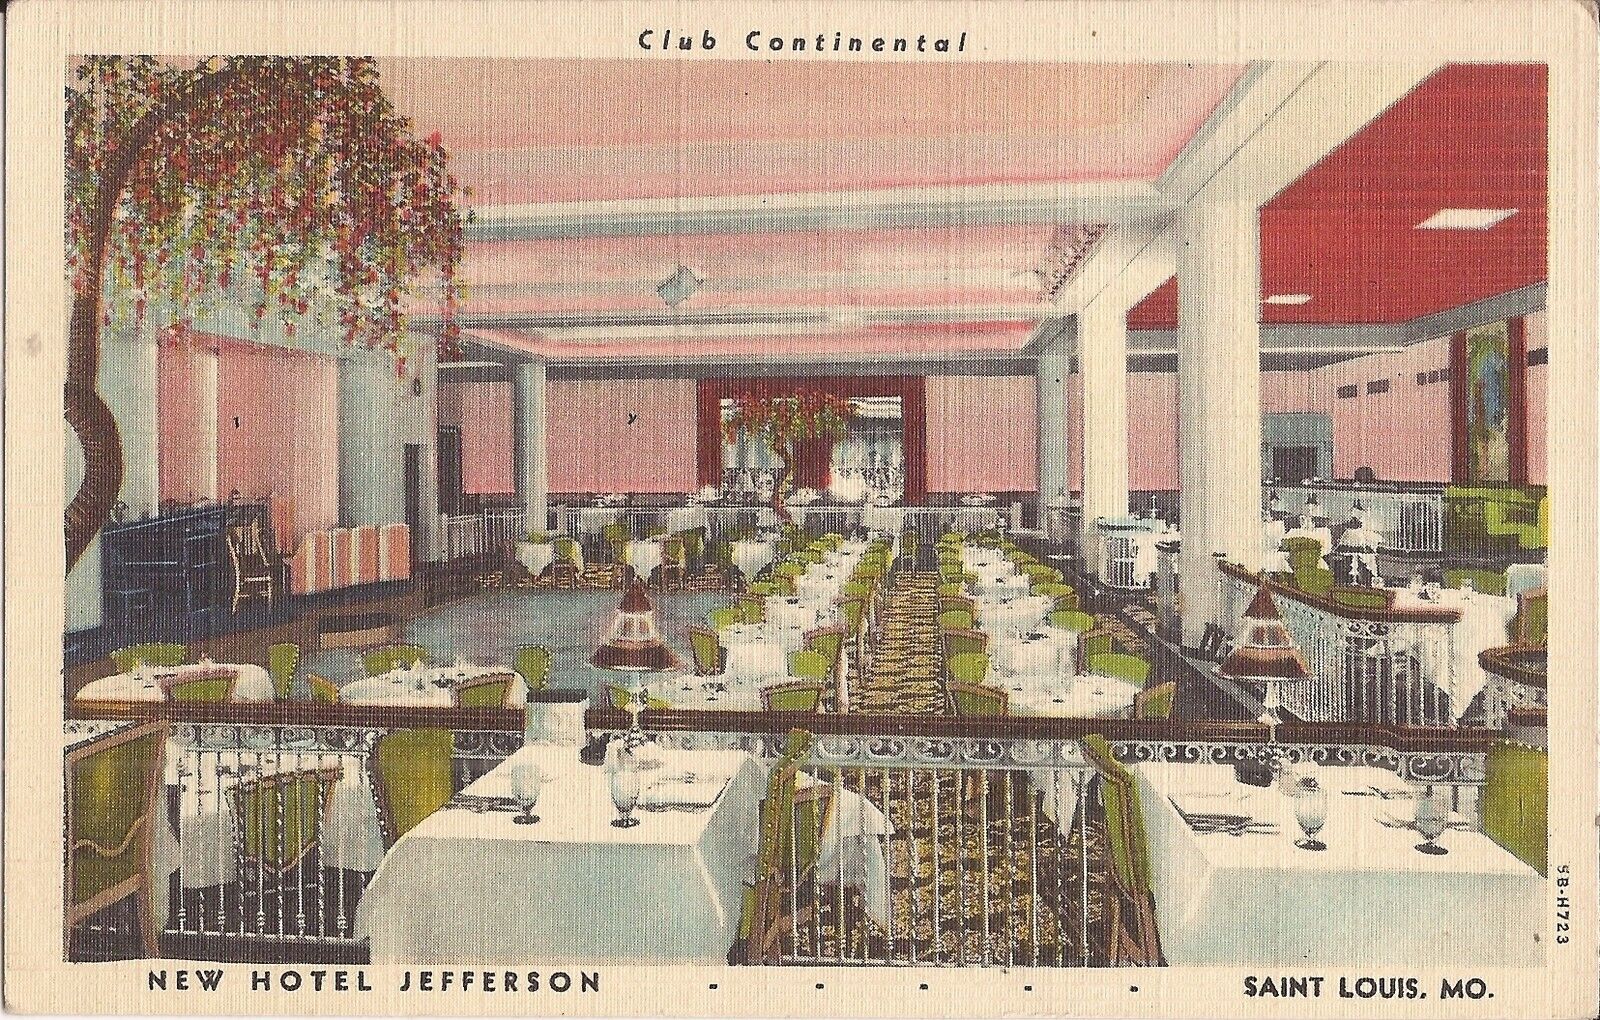 St. Louis, MISSOURI - New Hotel Jefferson - Club Continental - ARCHITECTURE 1945